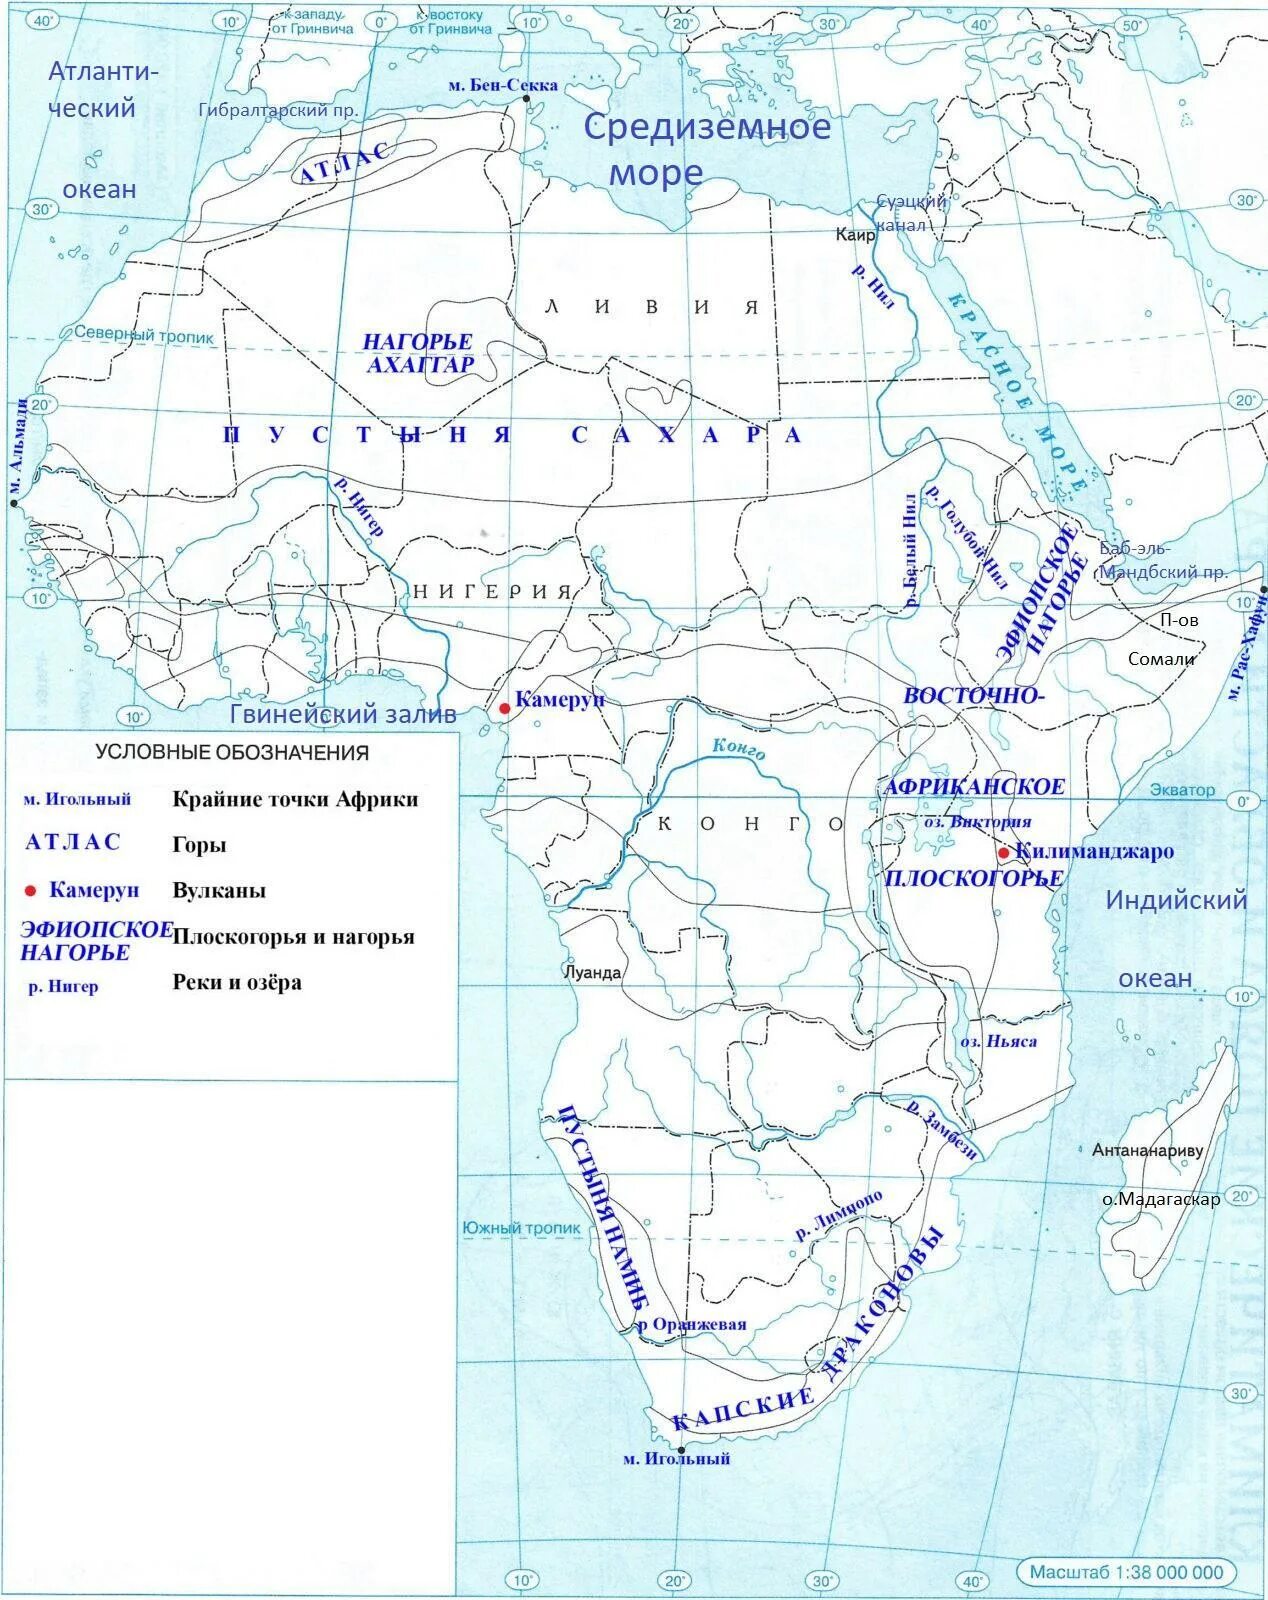 Африка береговая линия моря. Береговая линия Африки на карте. Африка заливы и проливы на карте. Карта Африки с морями заливами и проливами. Проливы Африки на карте.